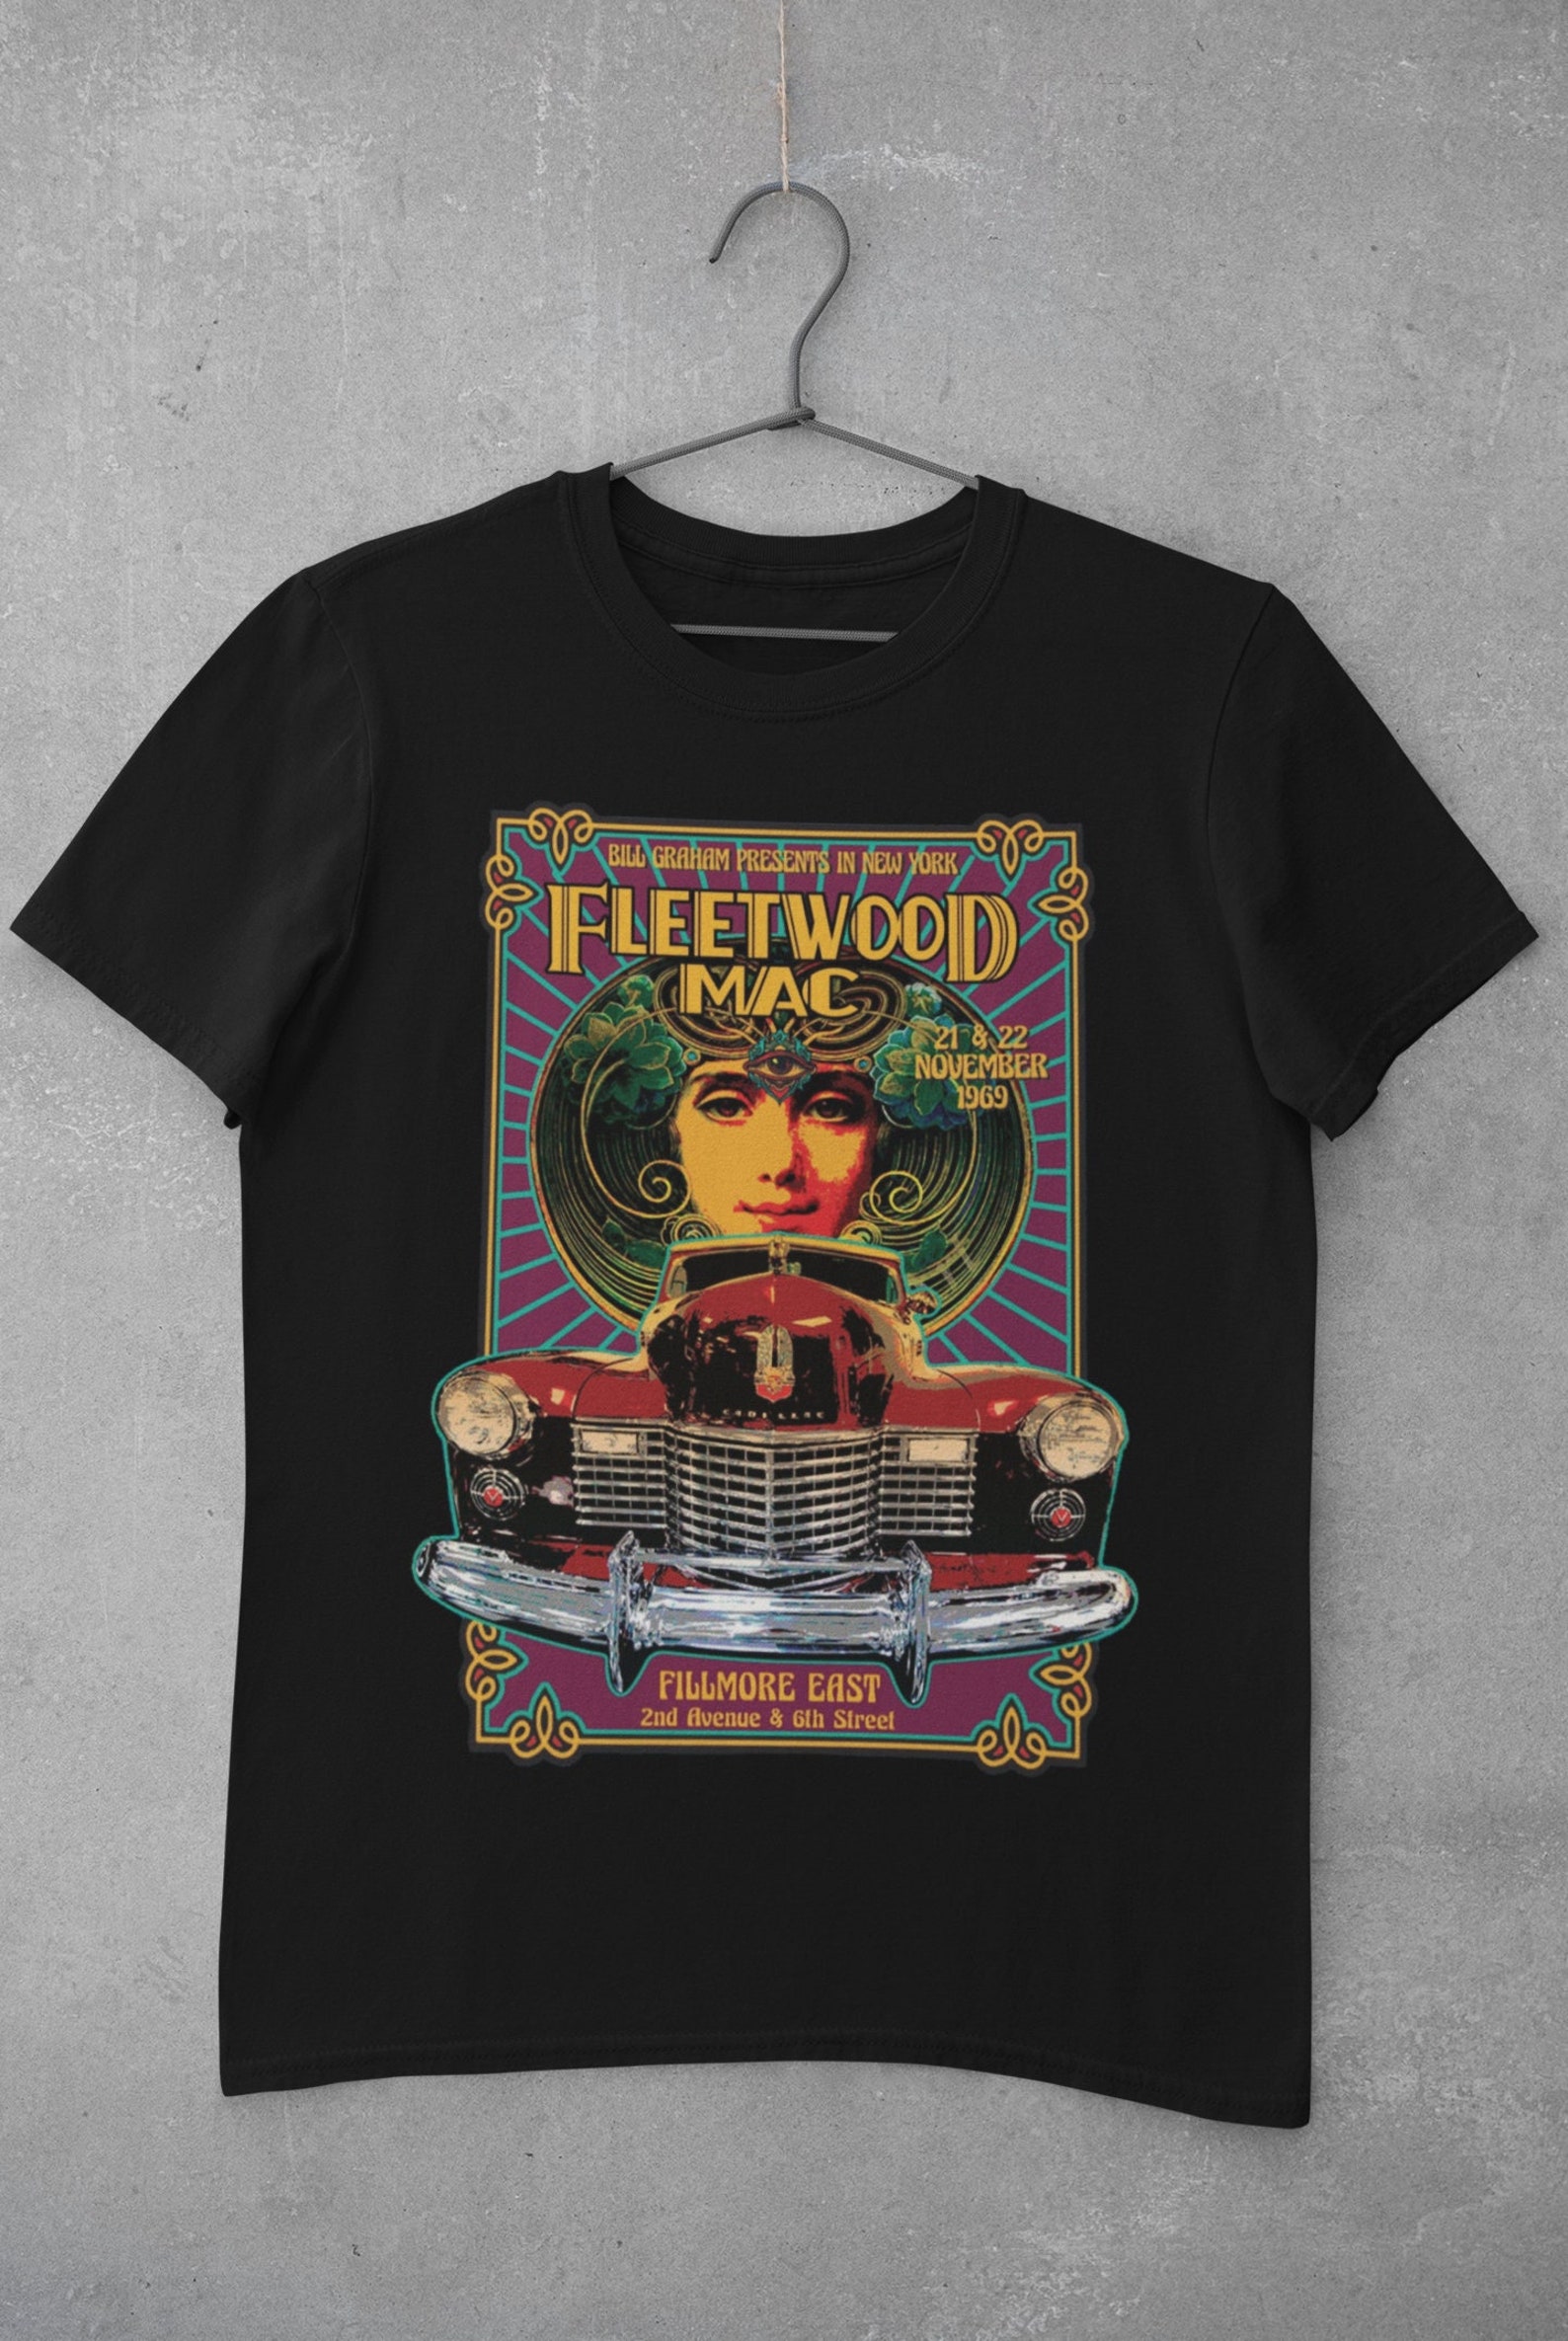 Fleetwood Mac Vintage Style 1969 Tour Shirt - Etsy